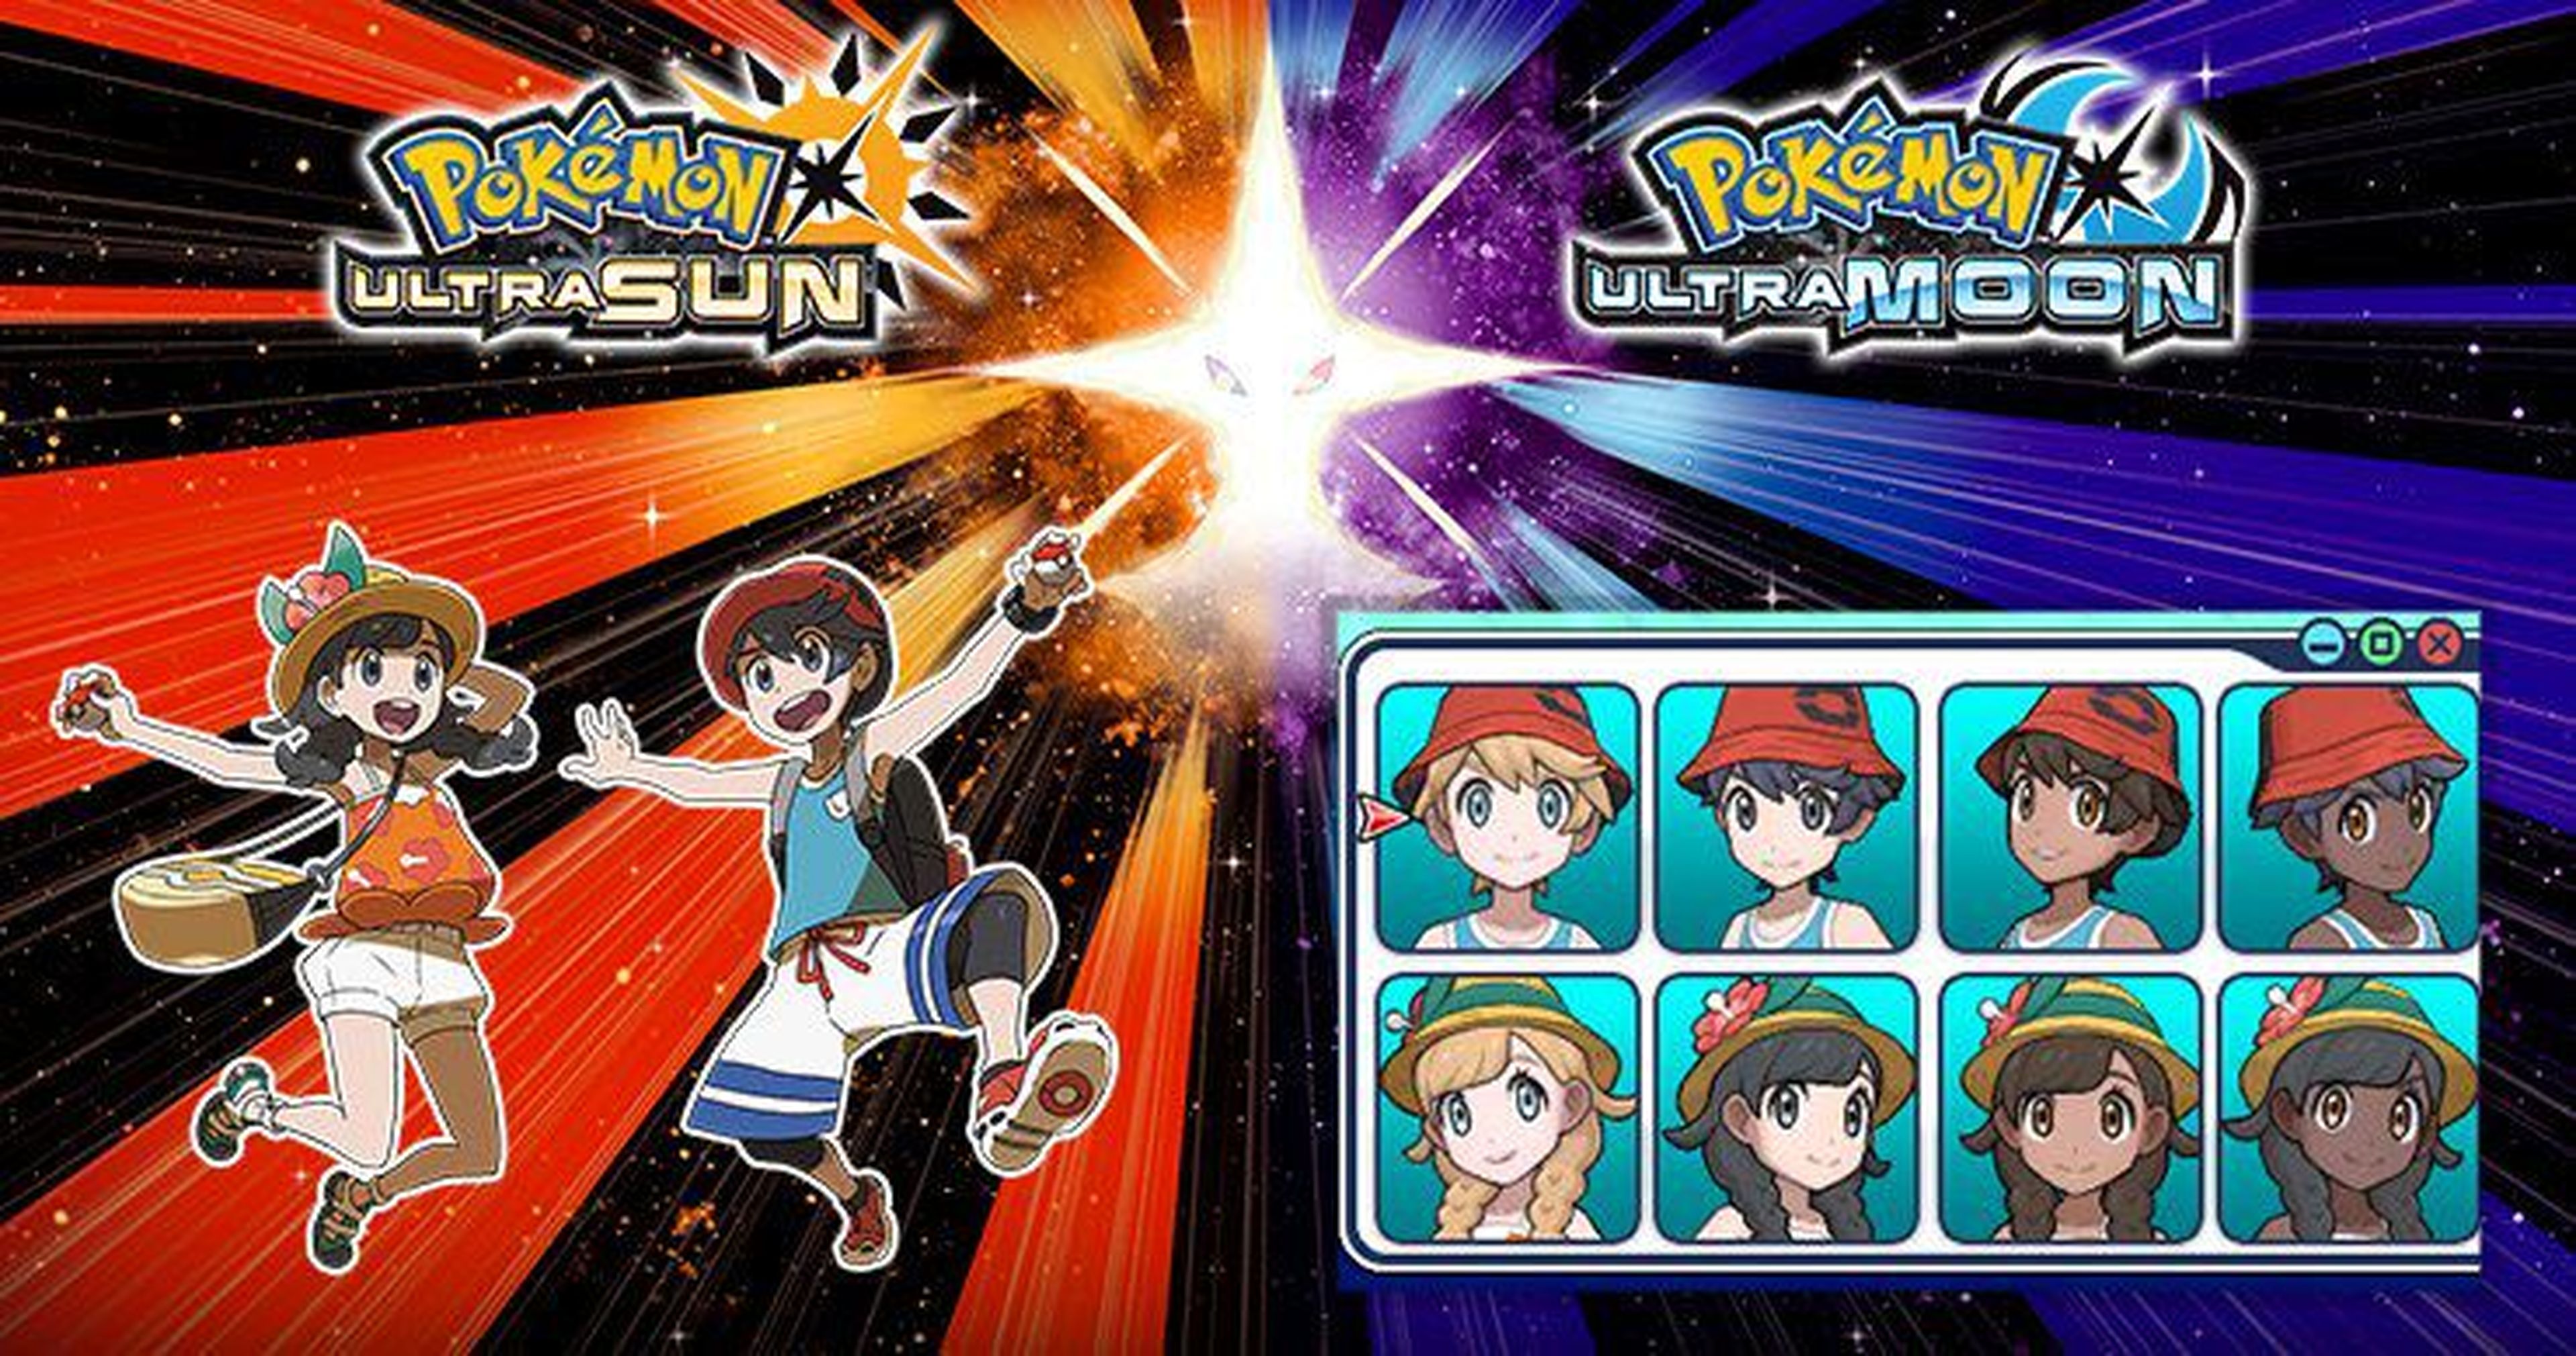 Pokémon UltraSol y UltraLuna